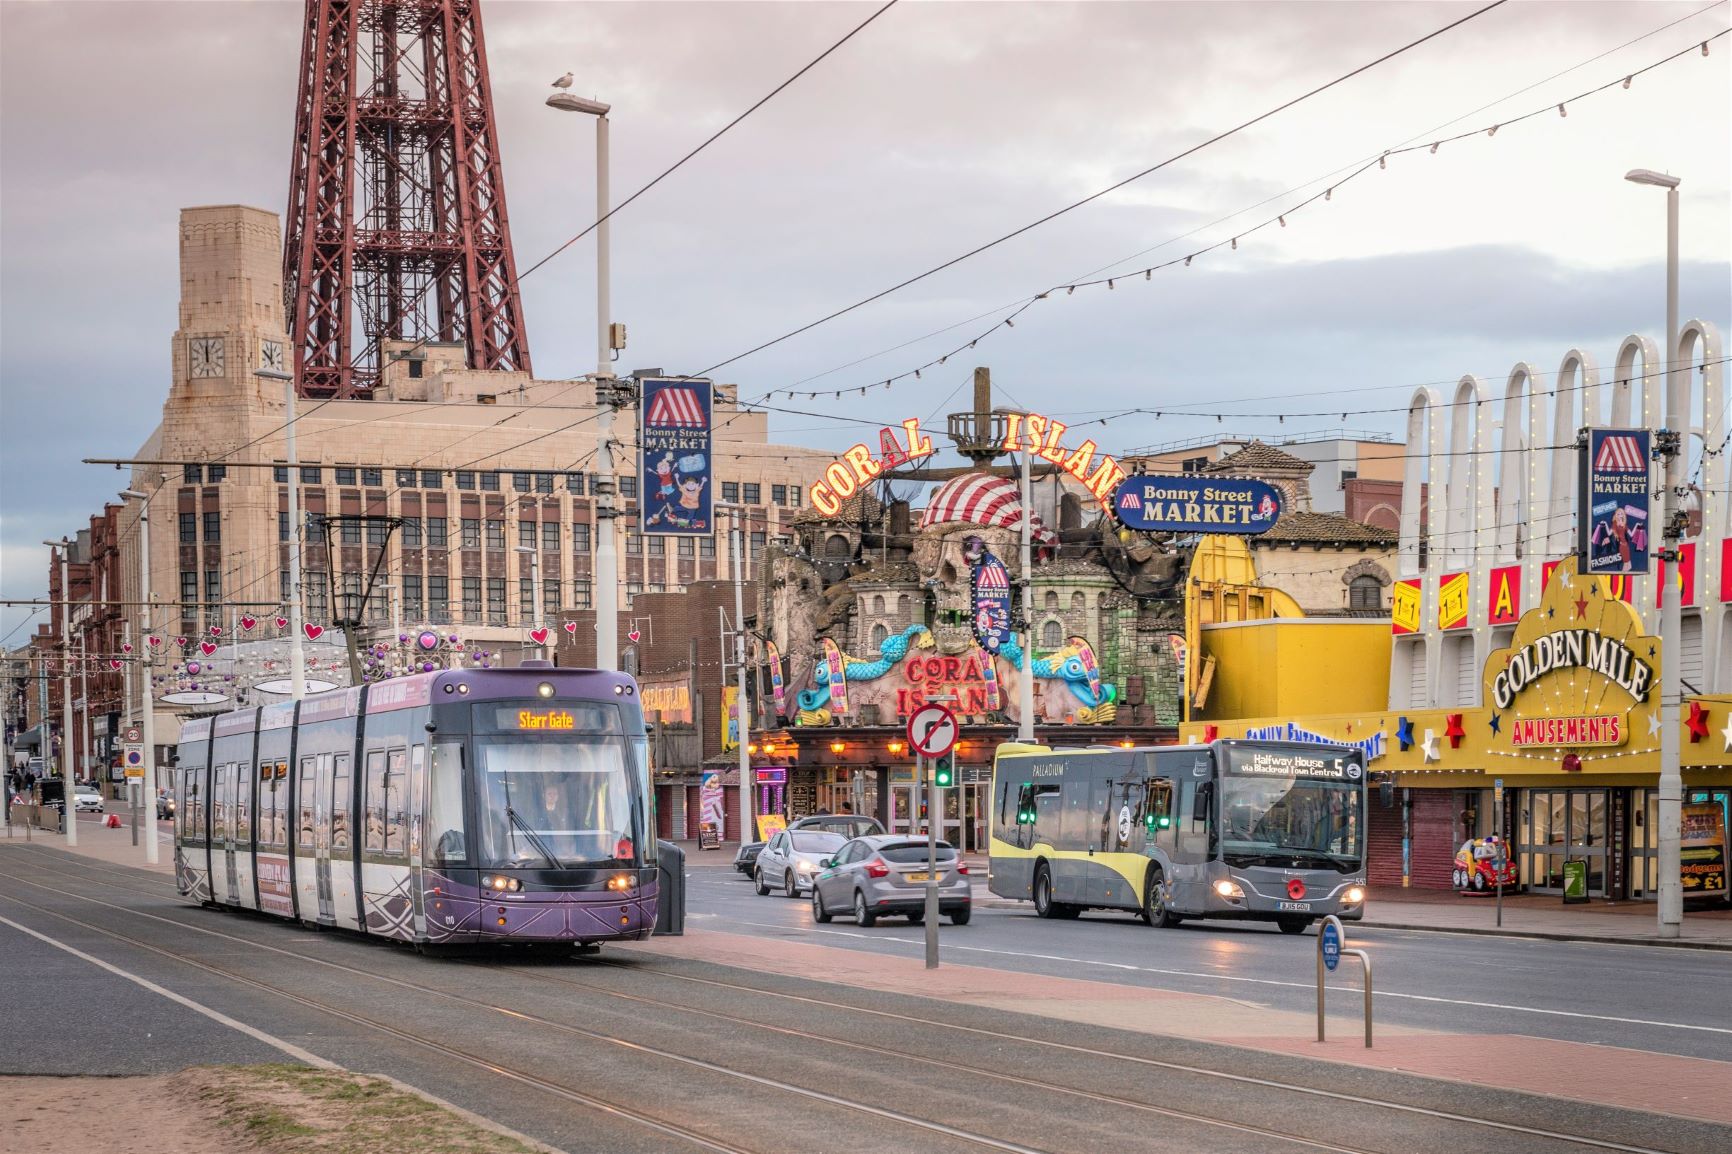 Blackpool Transport adopts Ticketer Handheld machines on tram fleet